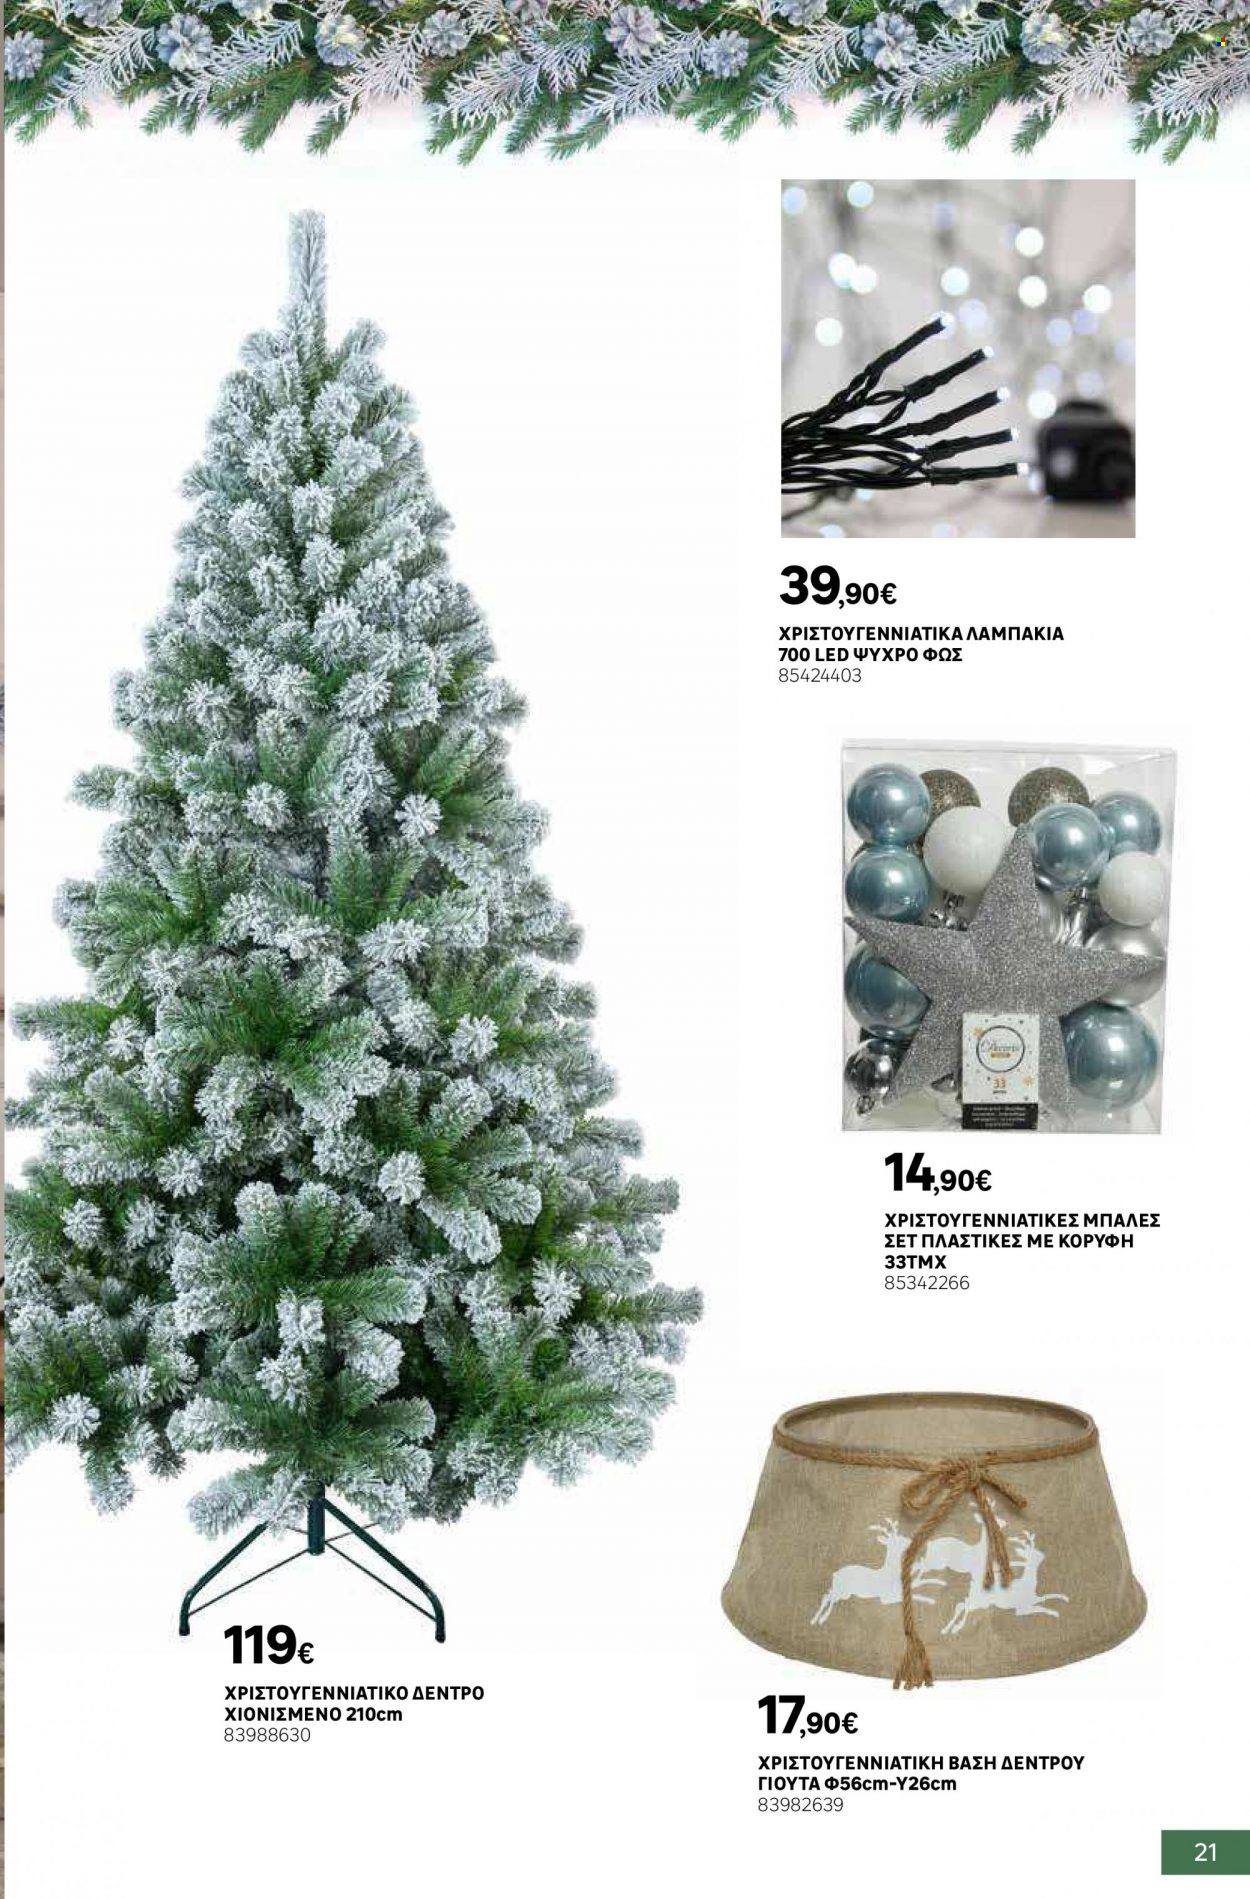 thumbnail - Φυλλάδια Leroy Merlin - Εκπτωτικά προϊόντα - χριστουγεννιάτικο δέντρο. Σελίδα 21.